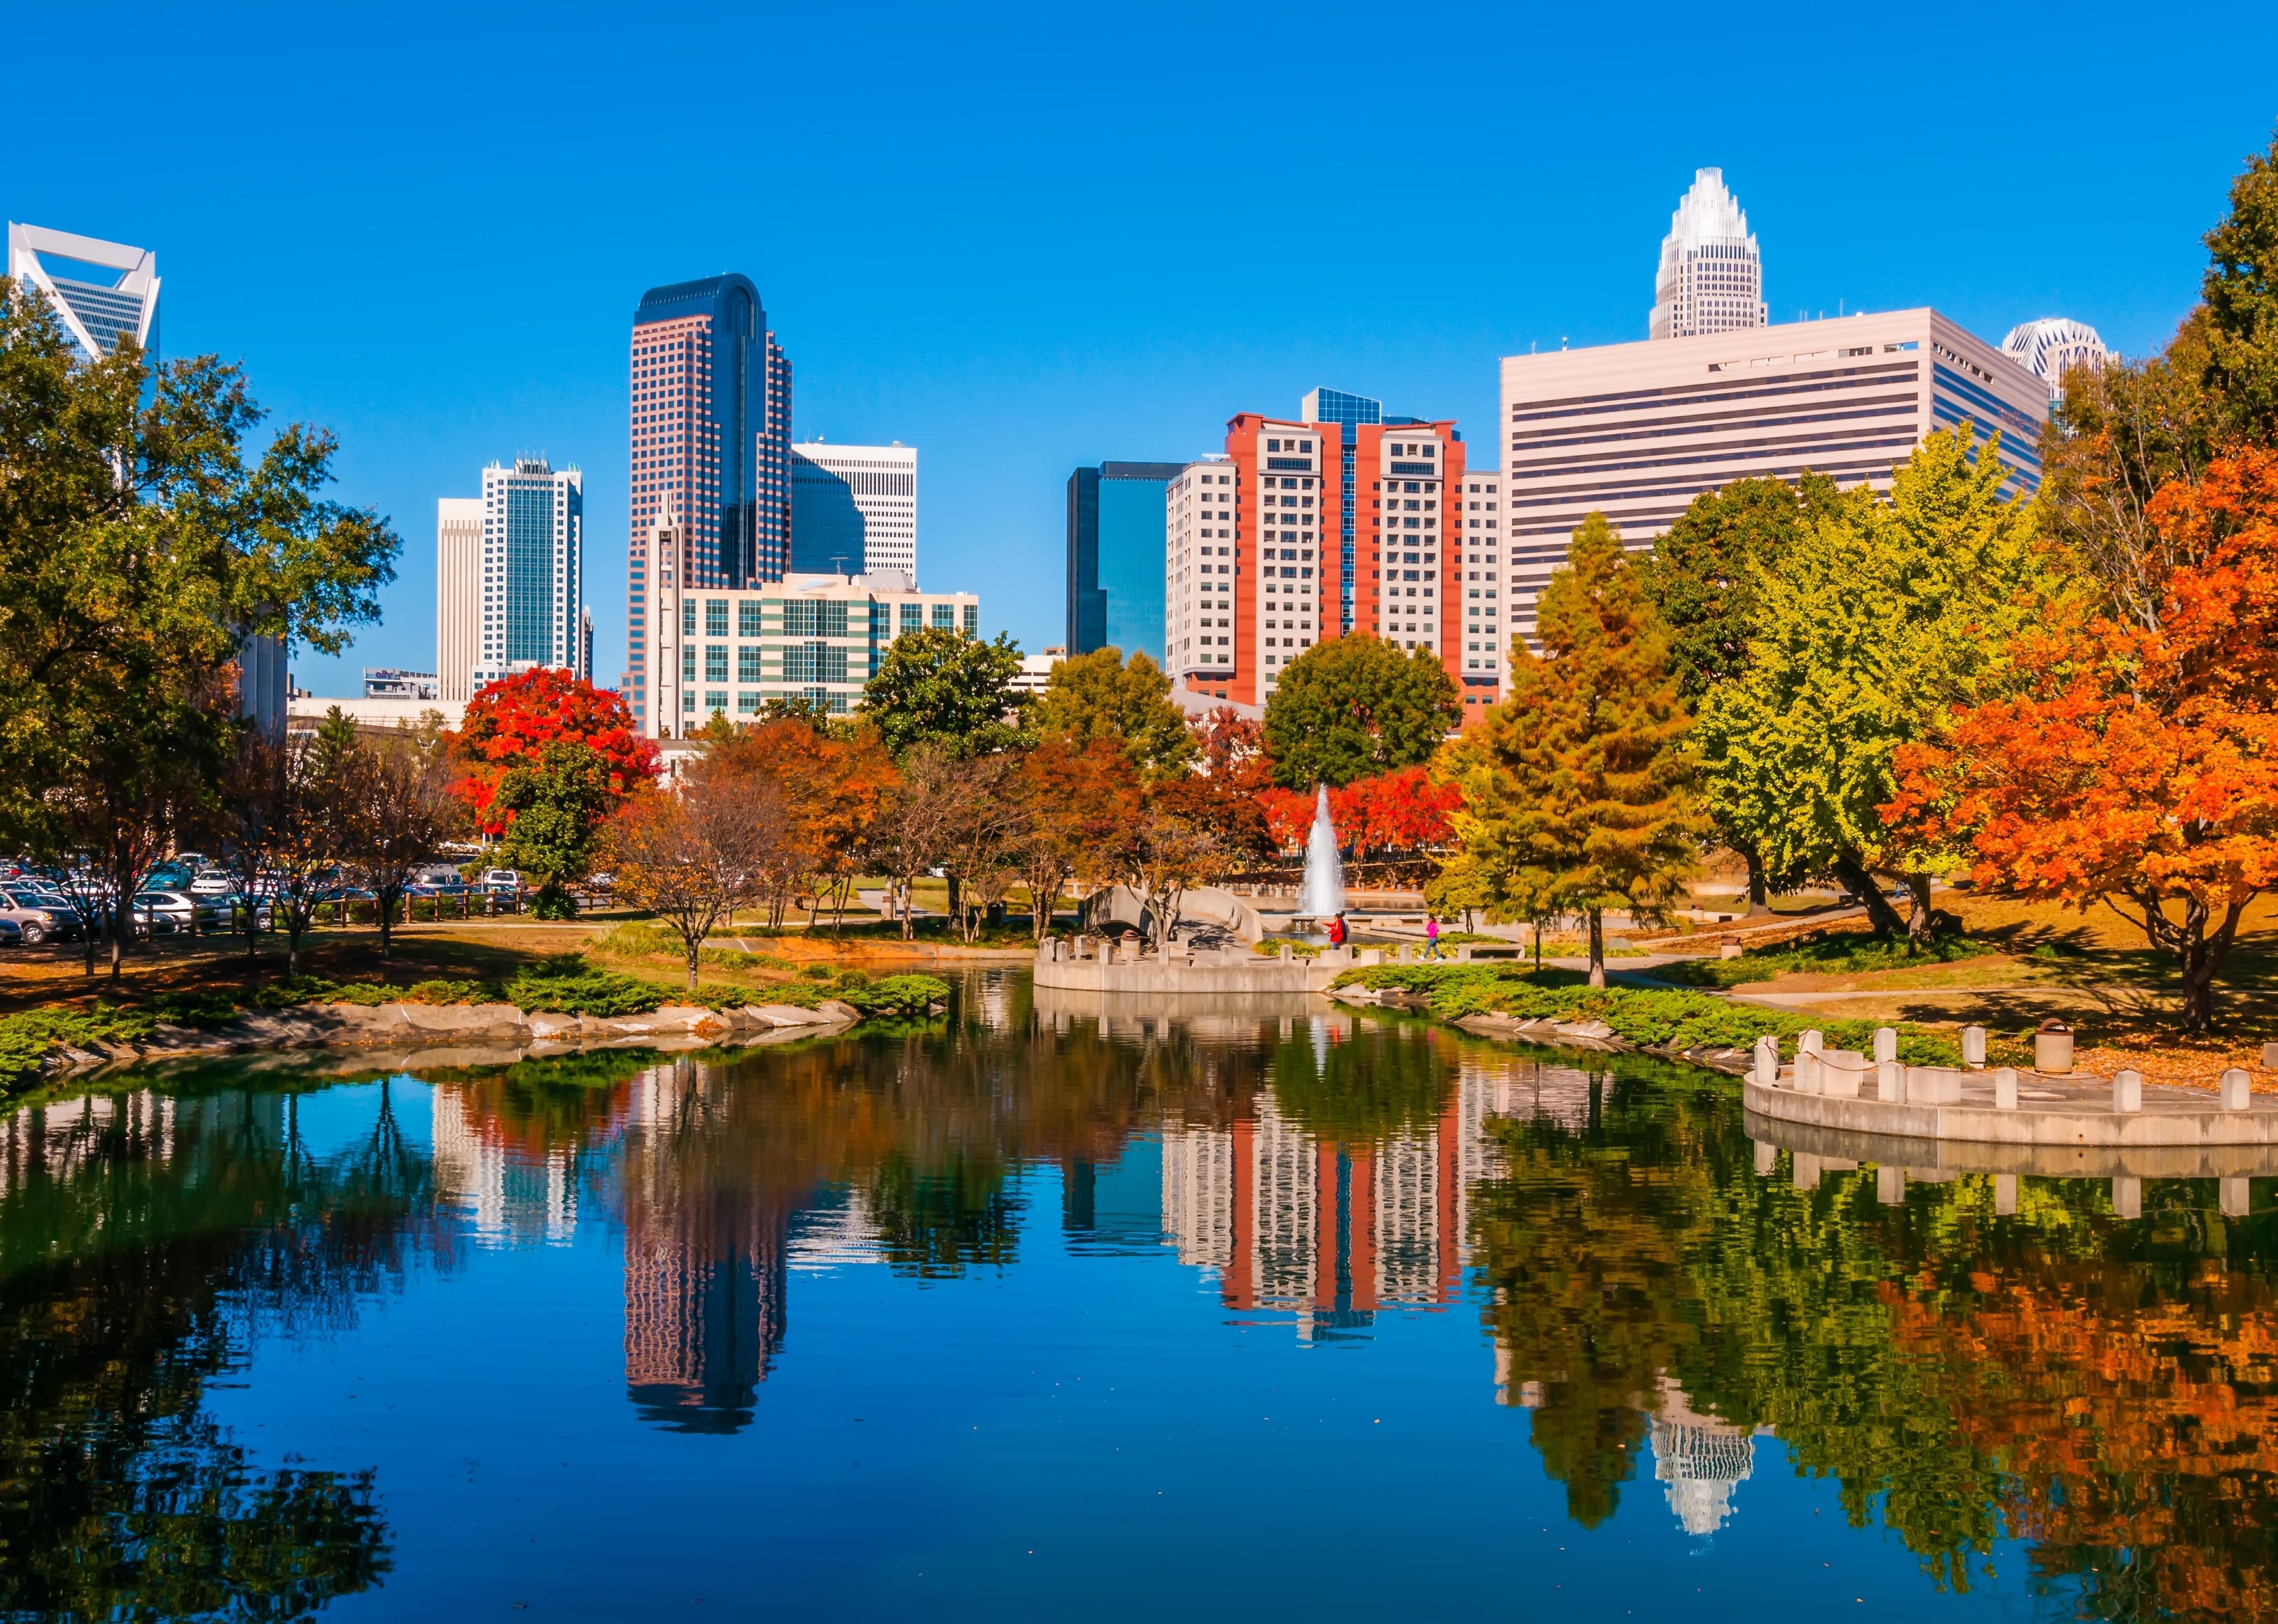 Fall colors on display in Charlotte, North Carolina.